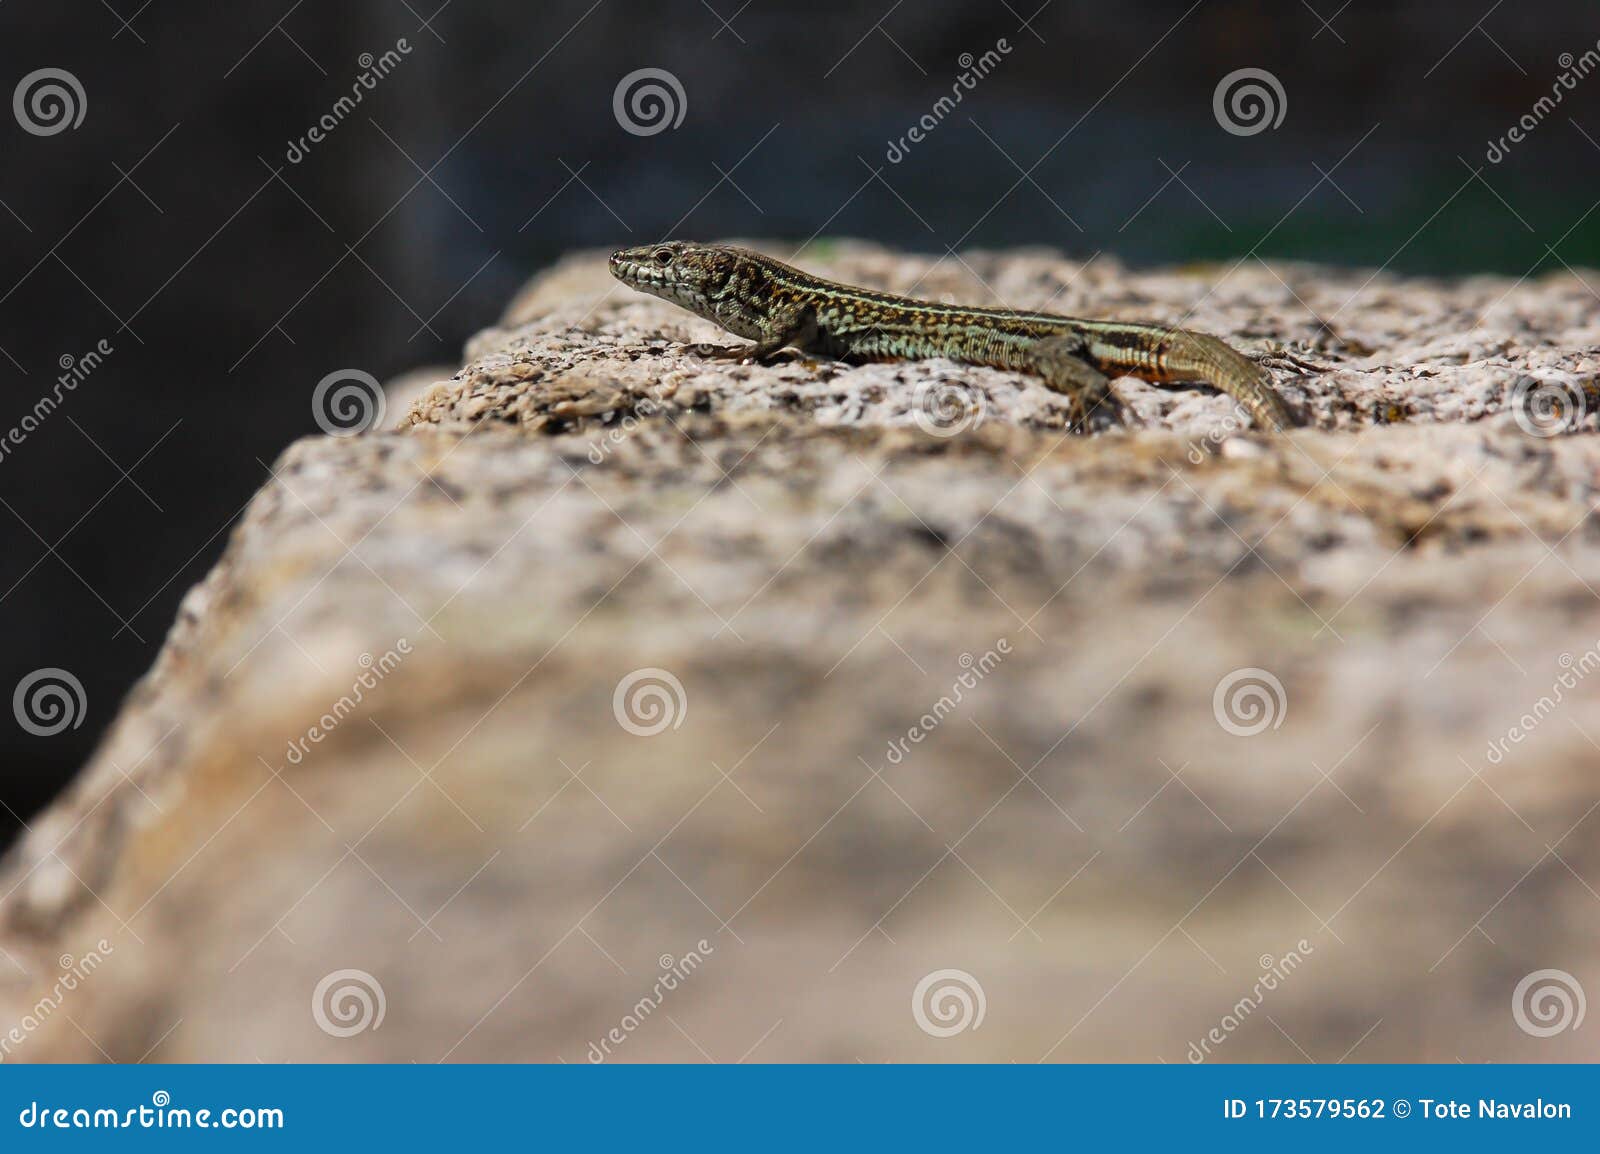 endemic male lizard iberolacerta cyreni sunbathing on a granite rock